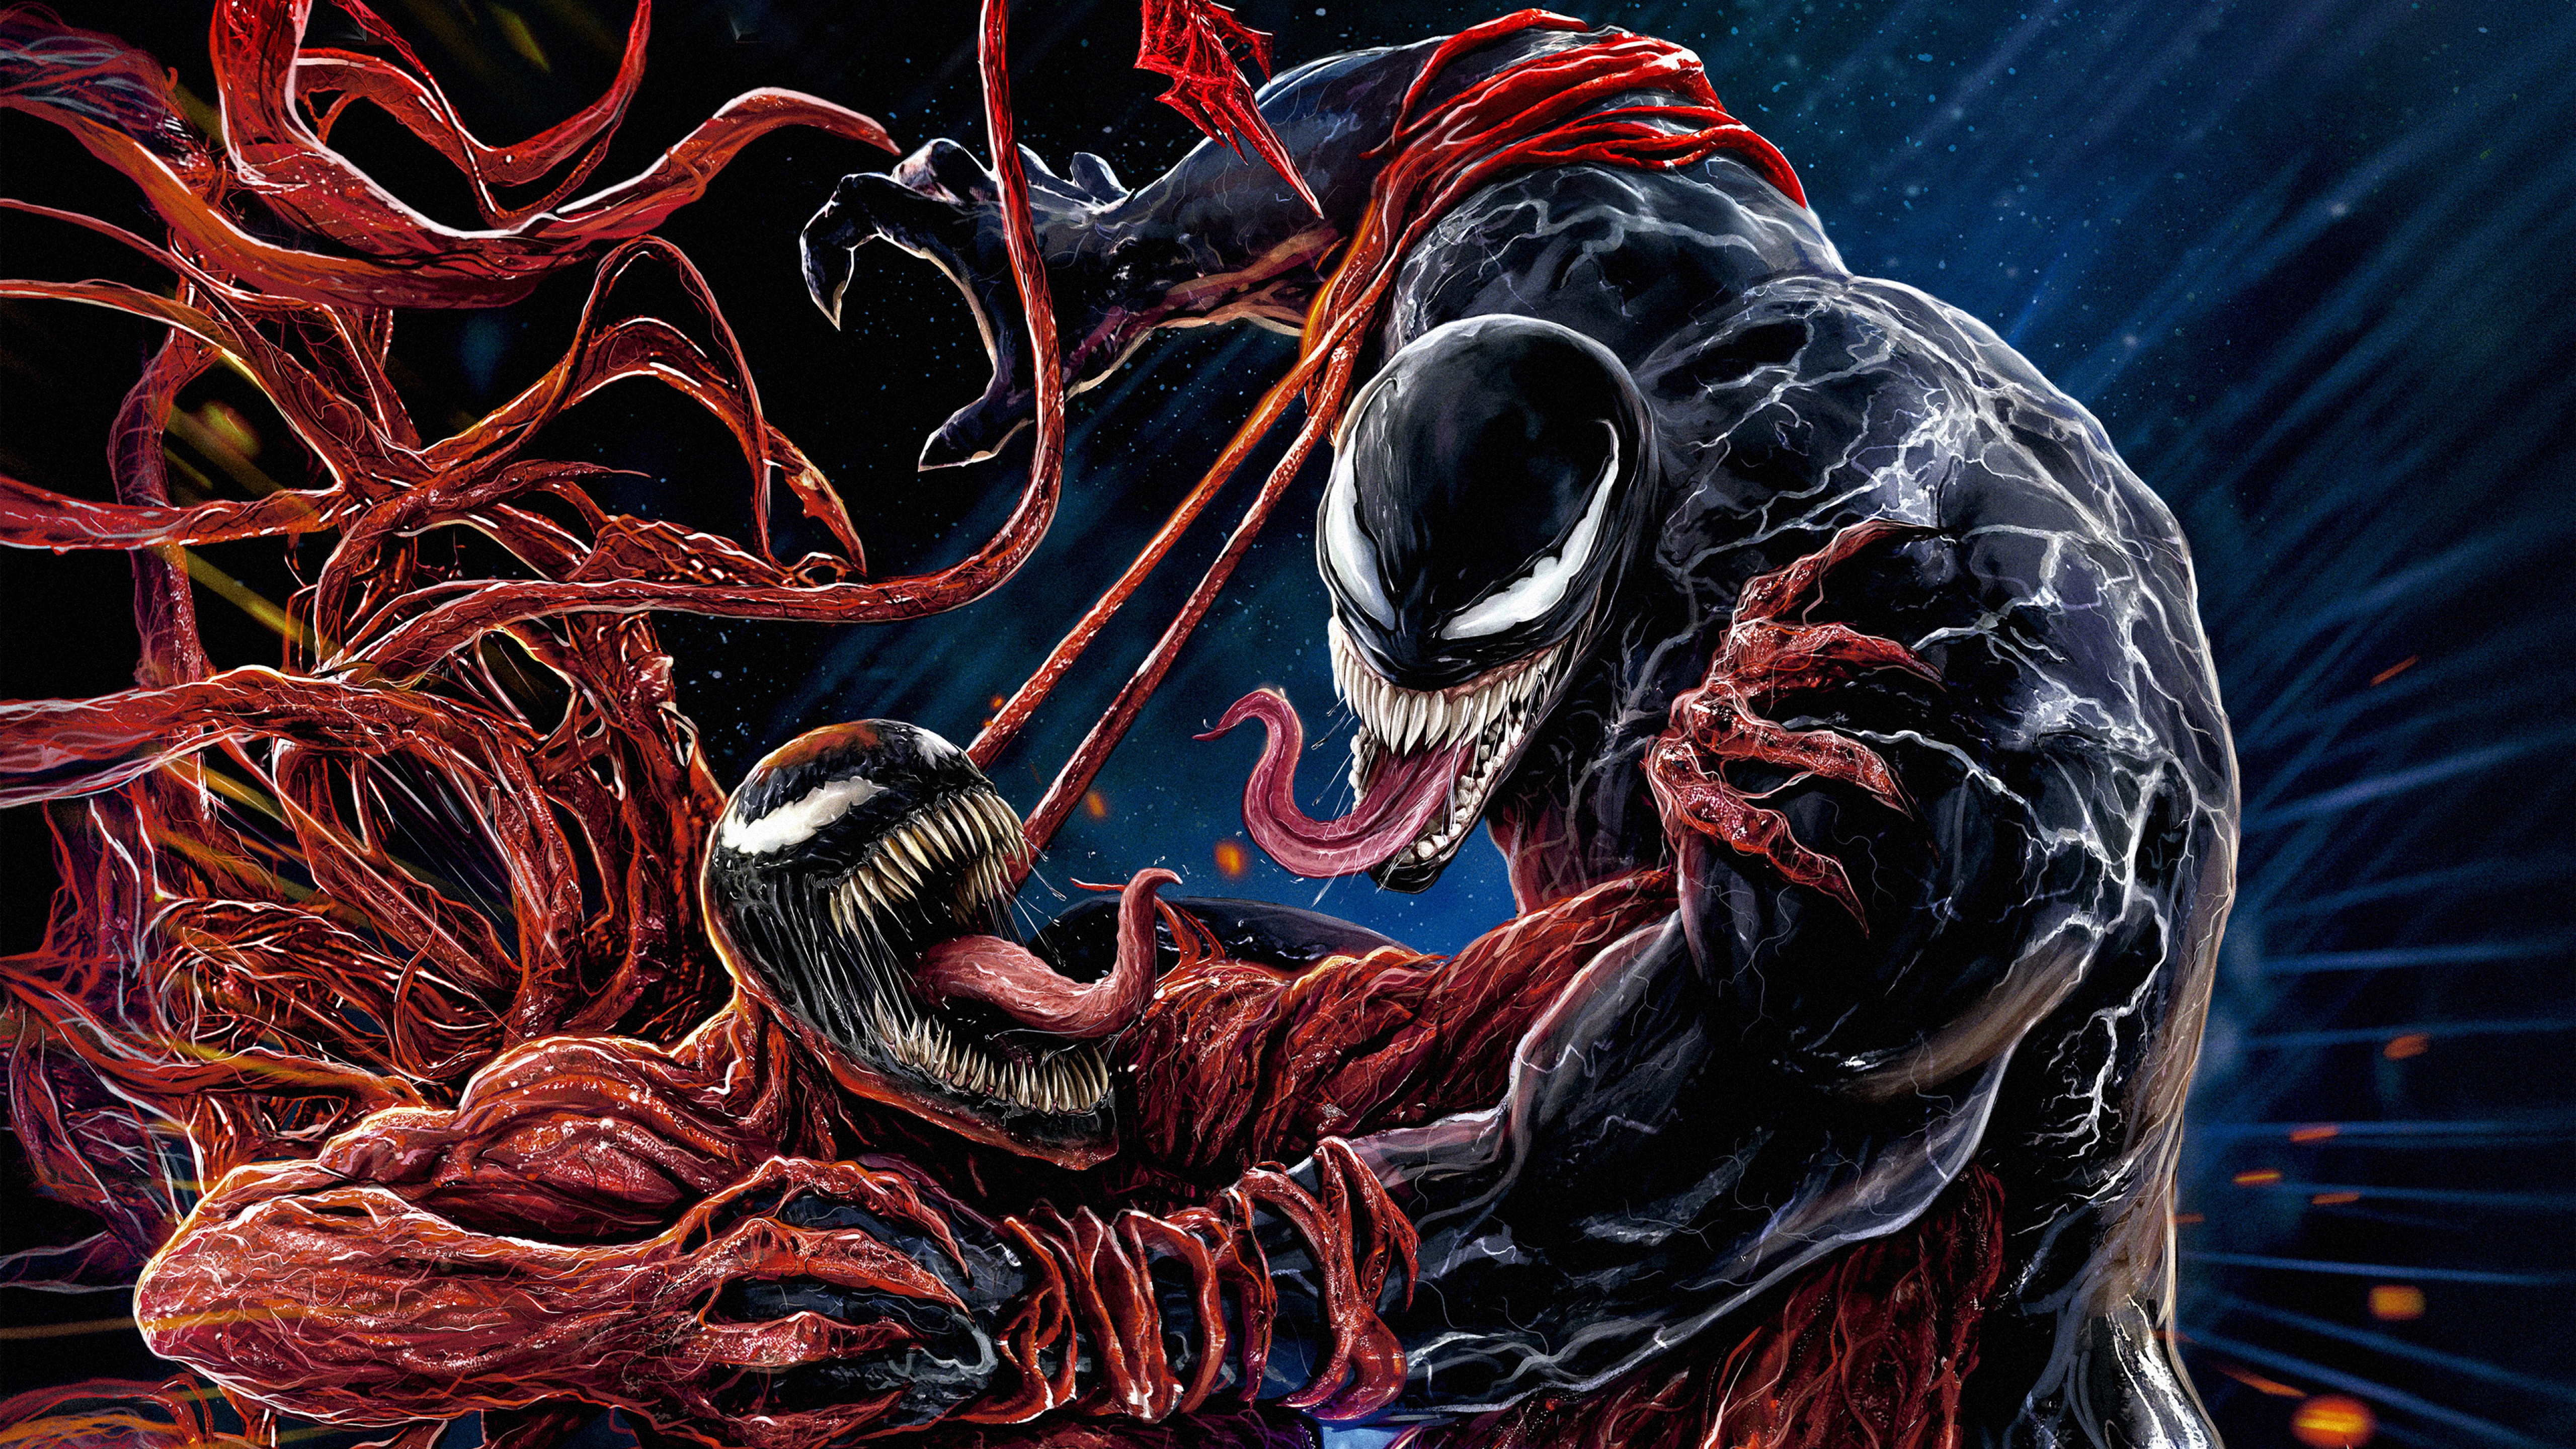 Venom wallpaper [7680x4320] : r/wallpaper